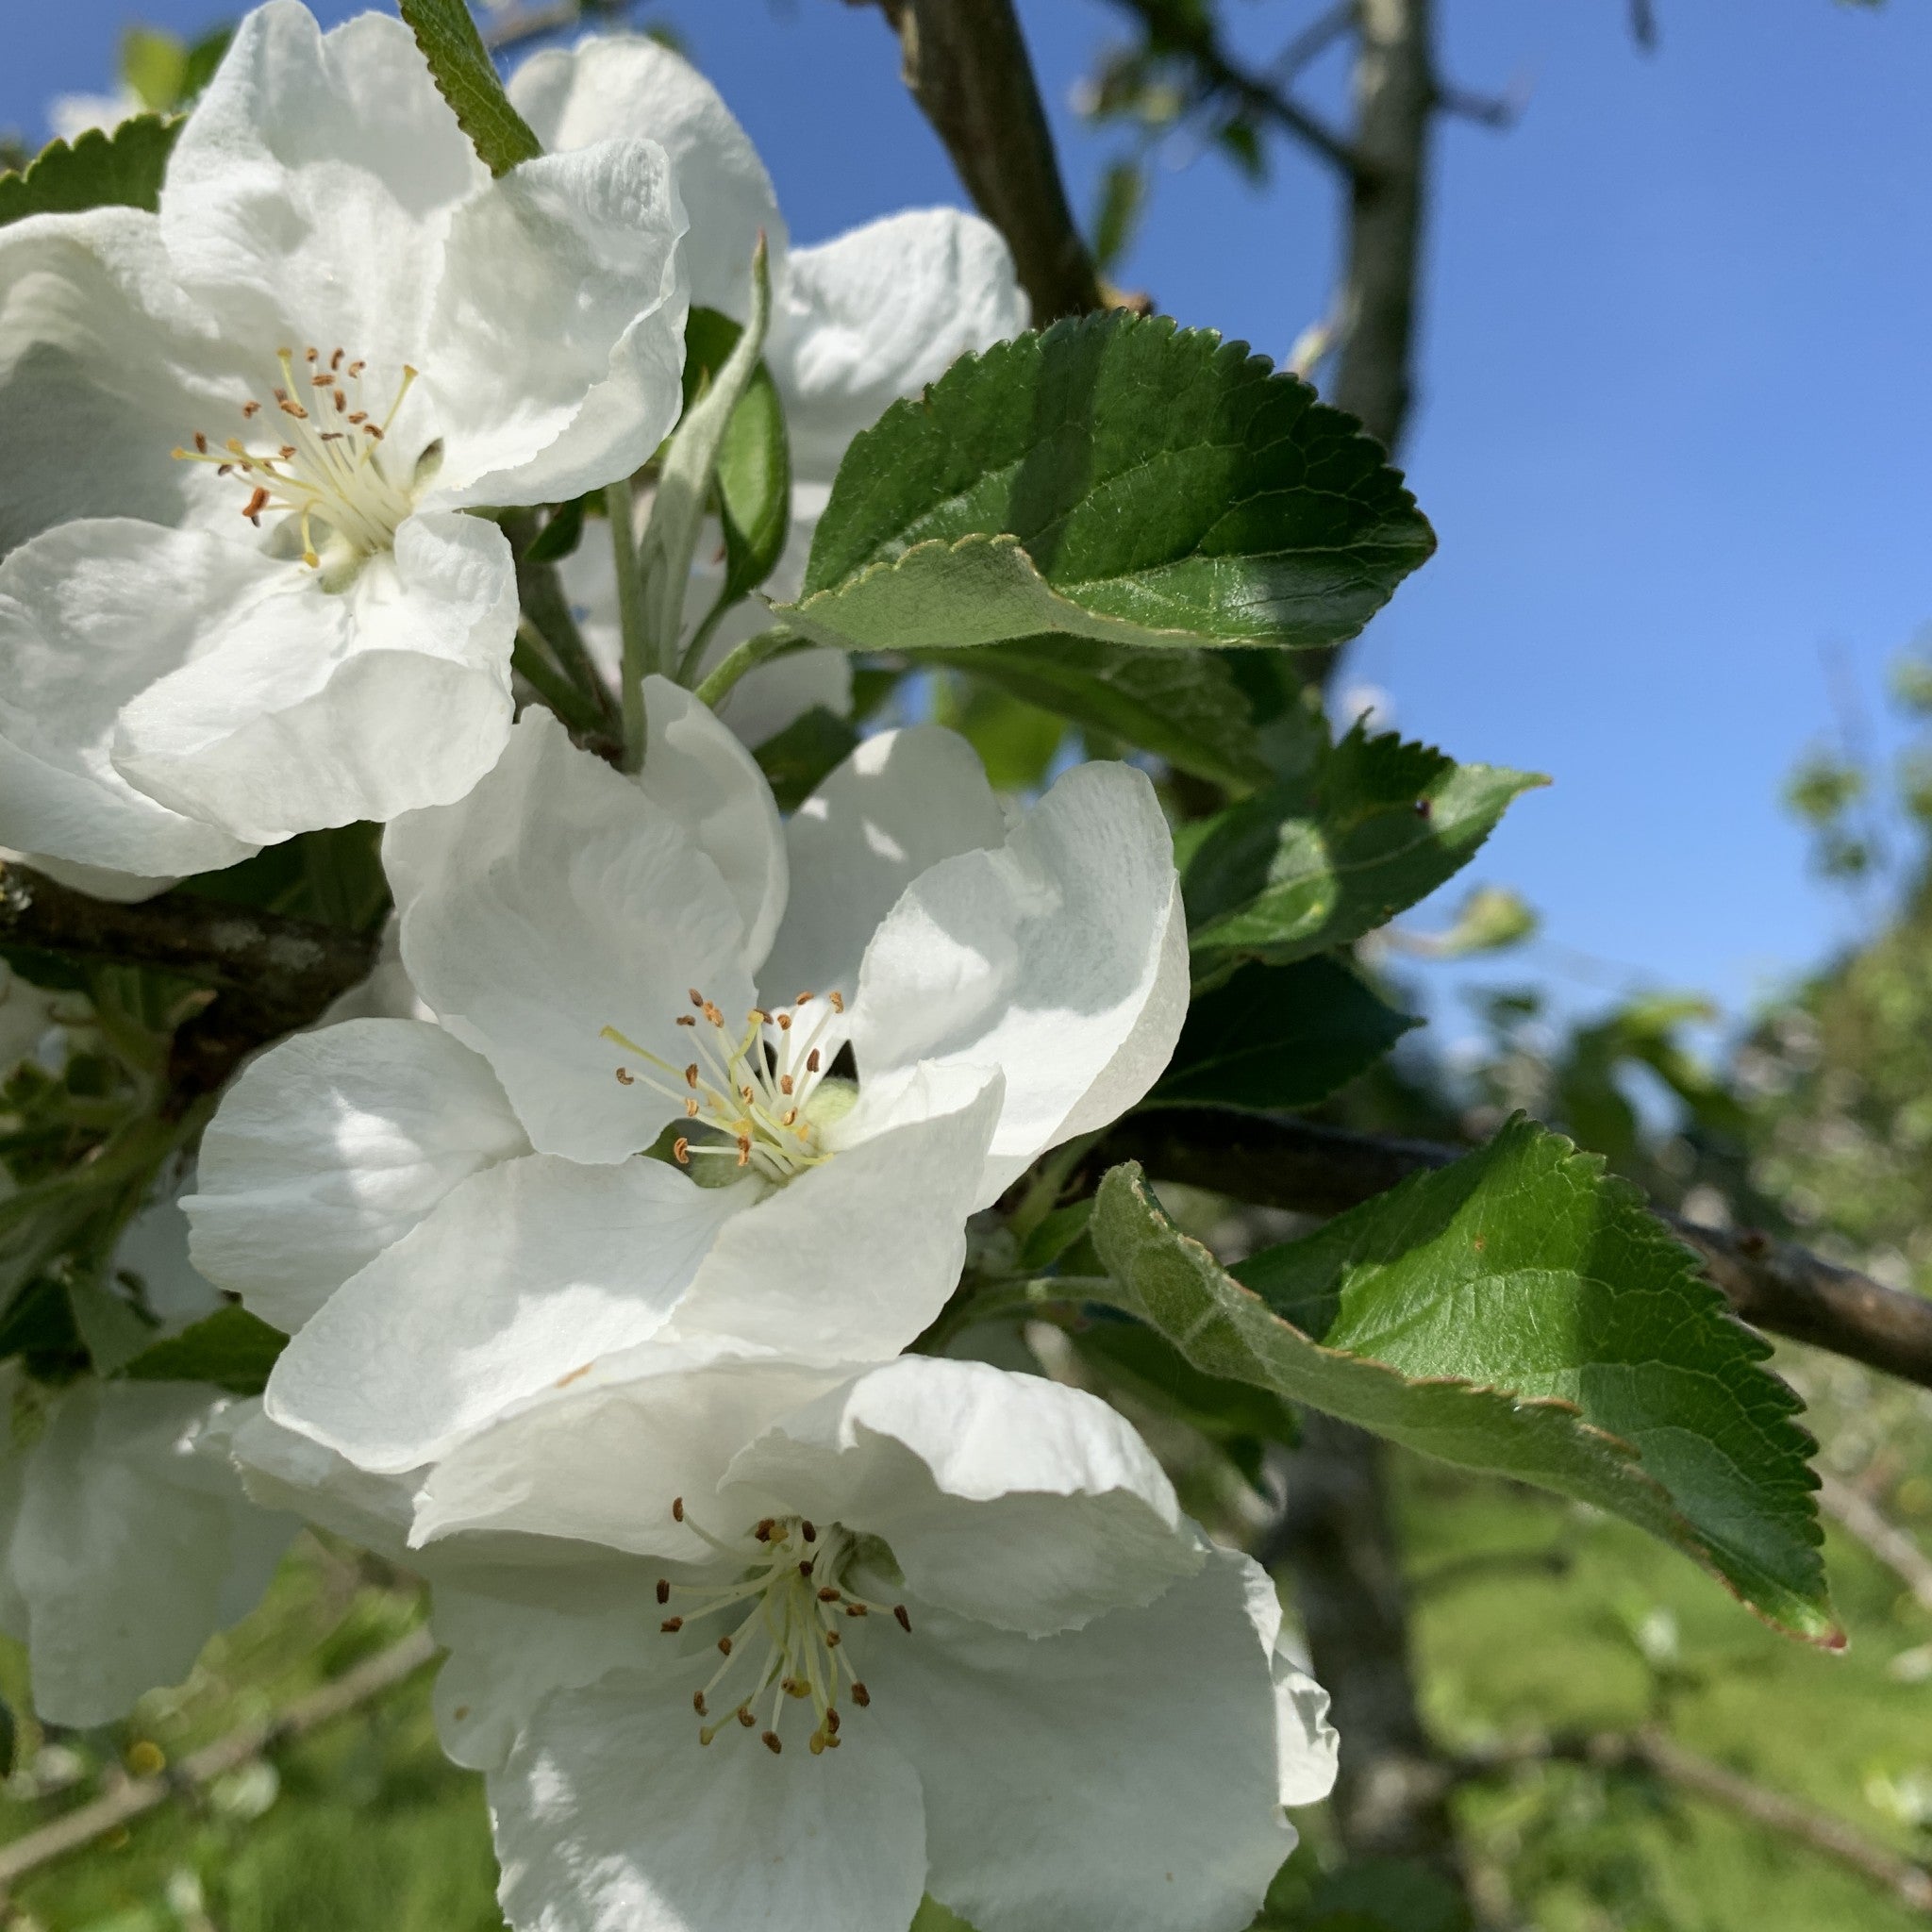 Perthyre apple tree blossom